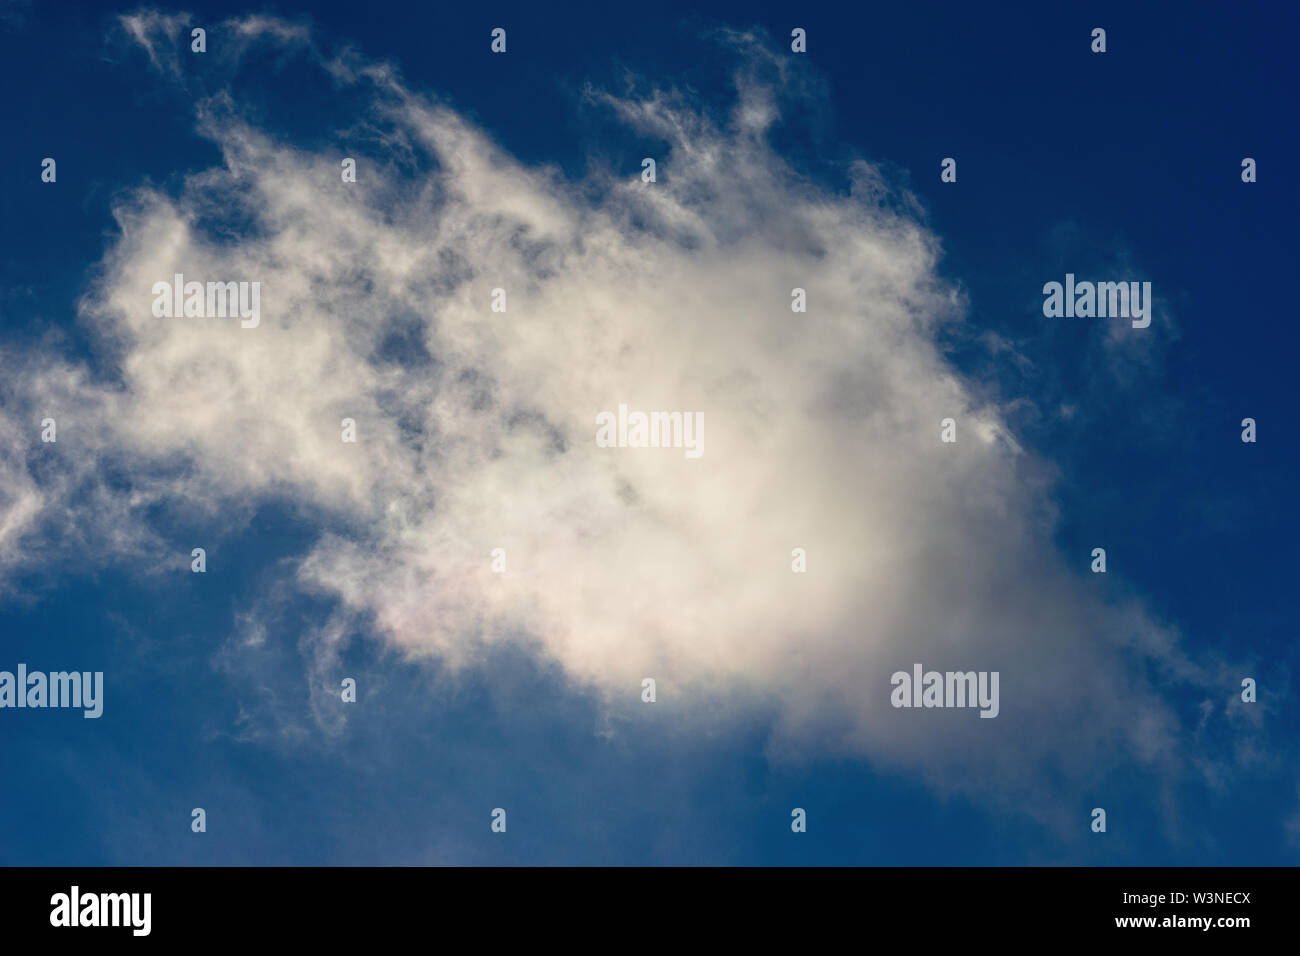 Sunlit white cloud against the background of dark blue sky. Fresh atmosphere, natural light Stock Photo